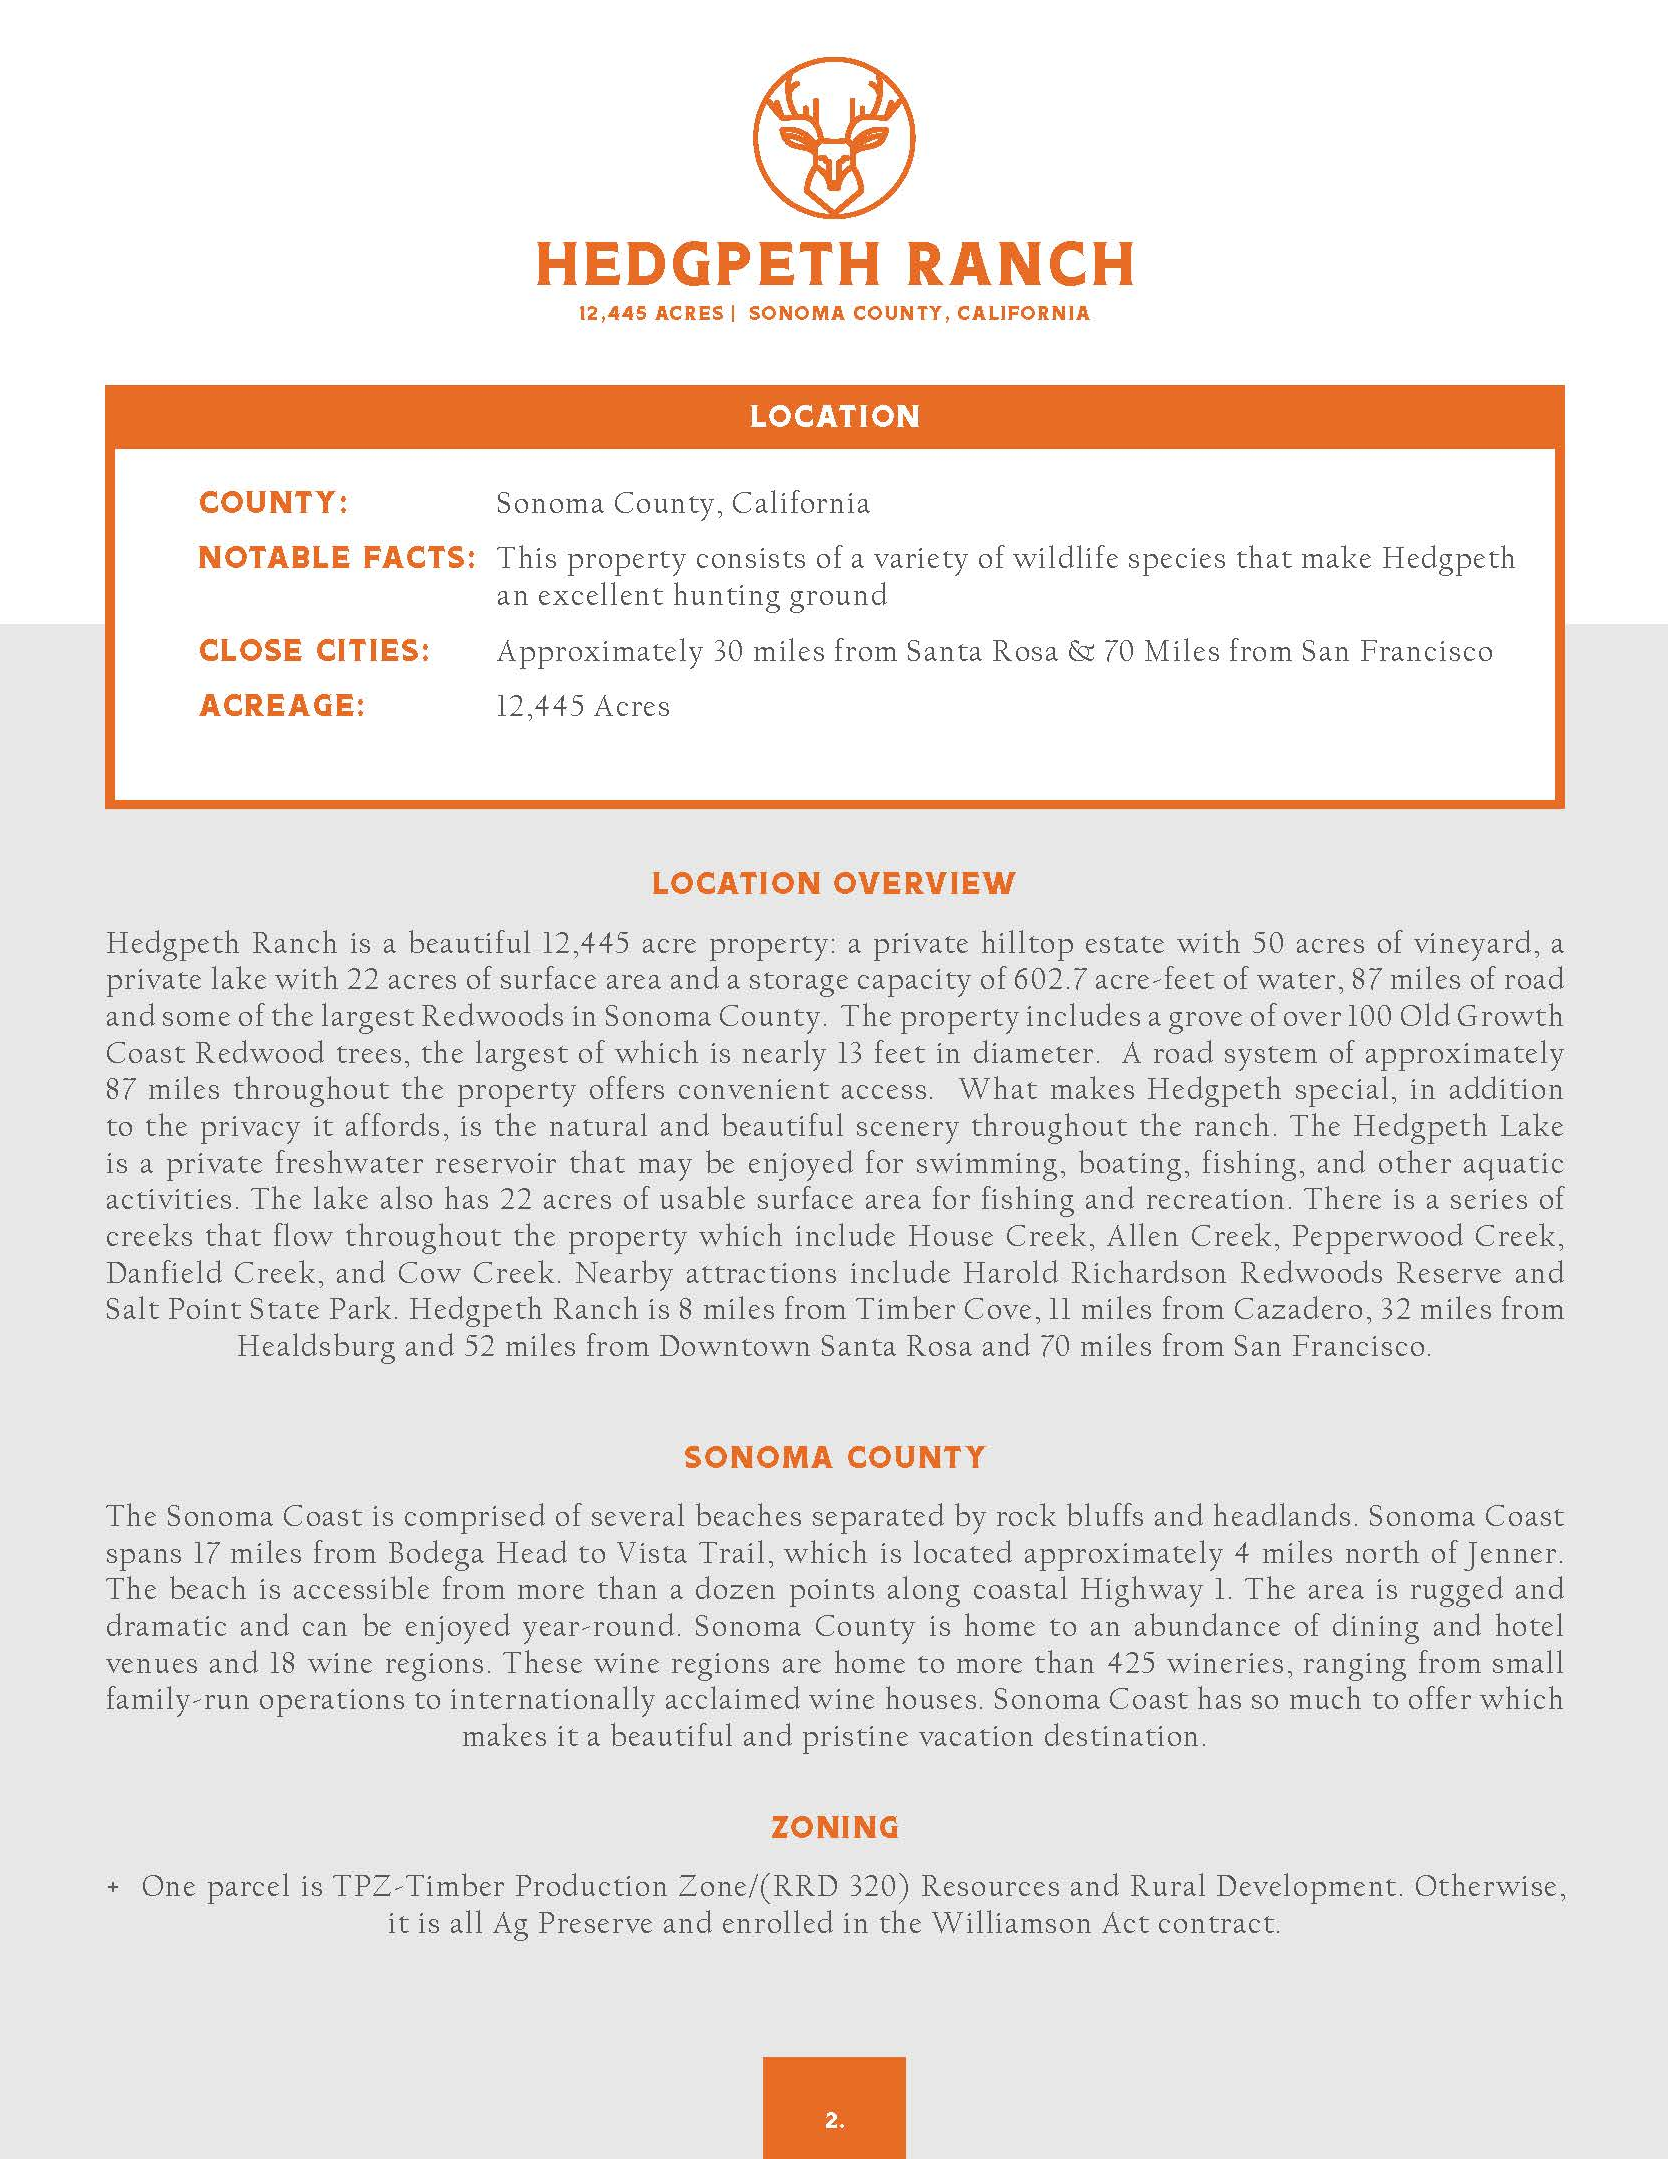 Hedgpeth Ranch Brochure_Page_2392_03.jpg